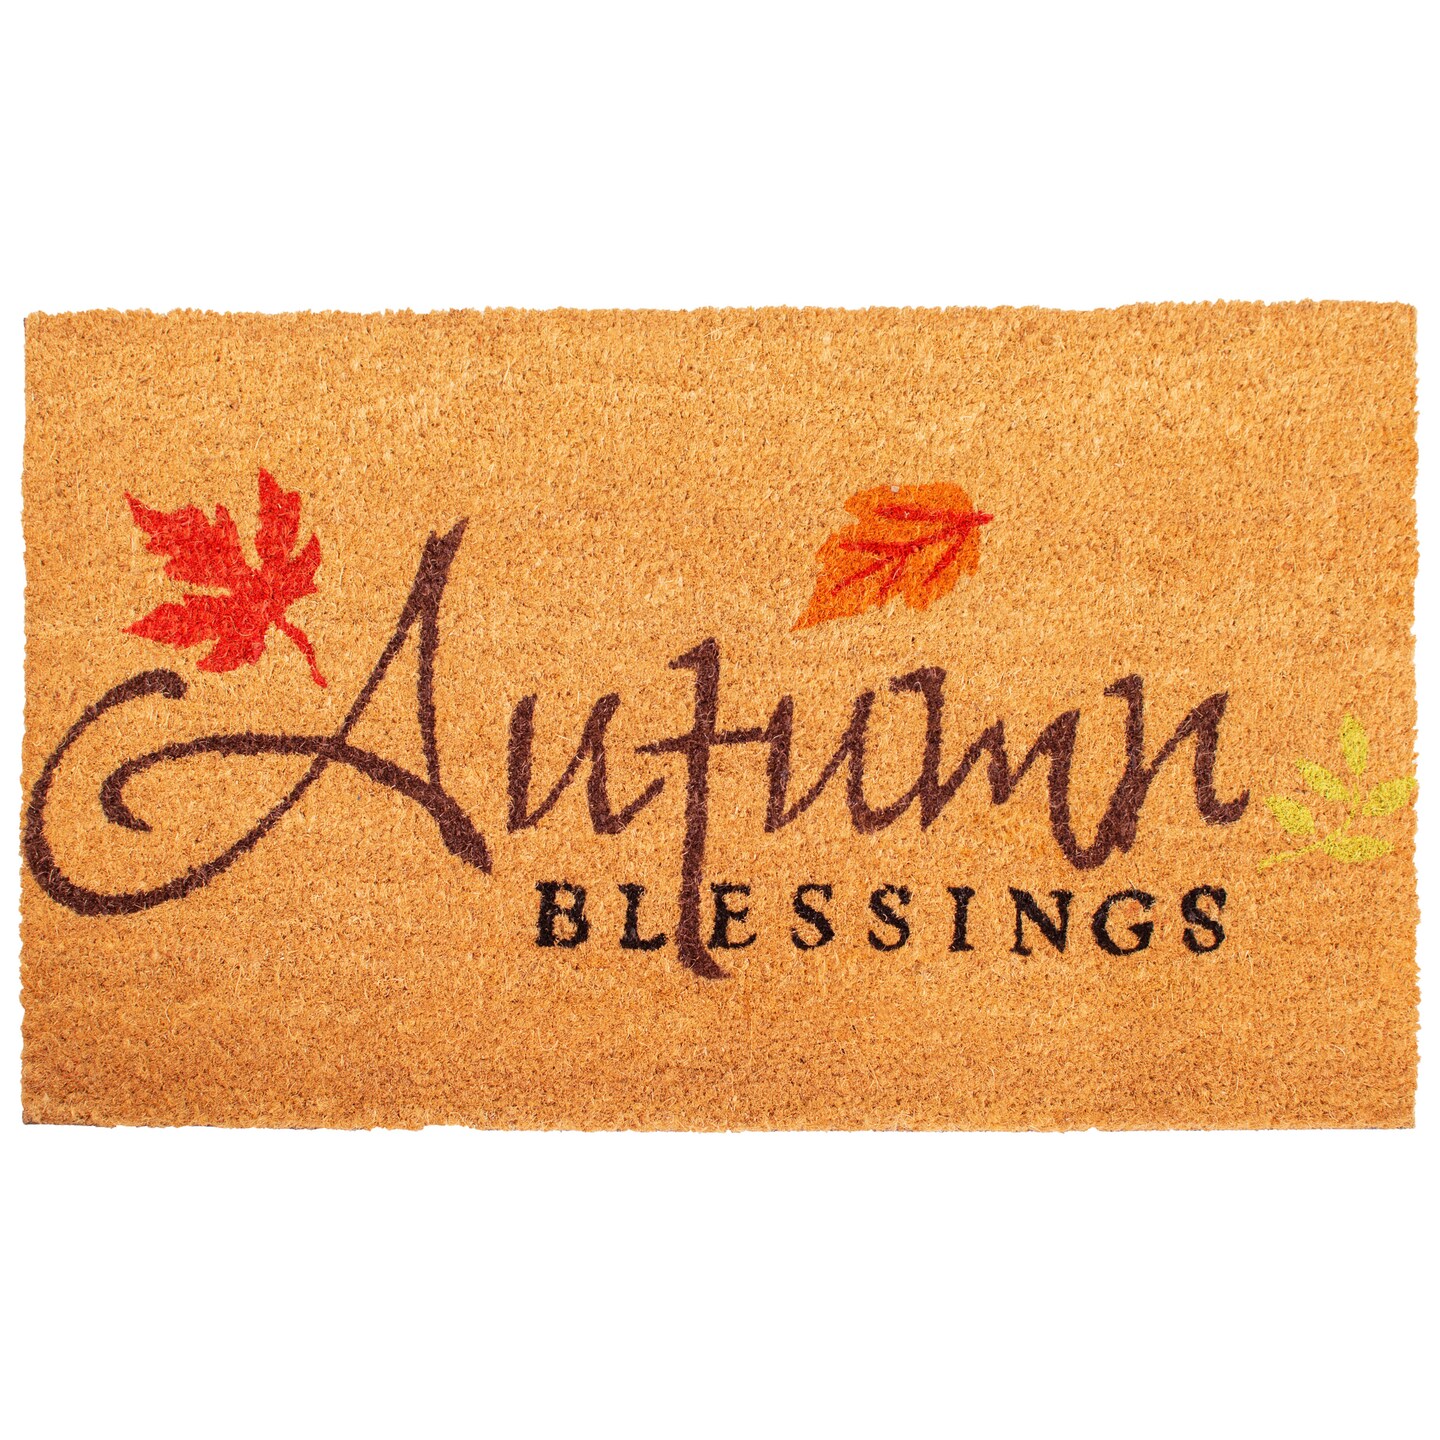 Autumn Blessings Doormat